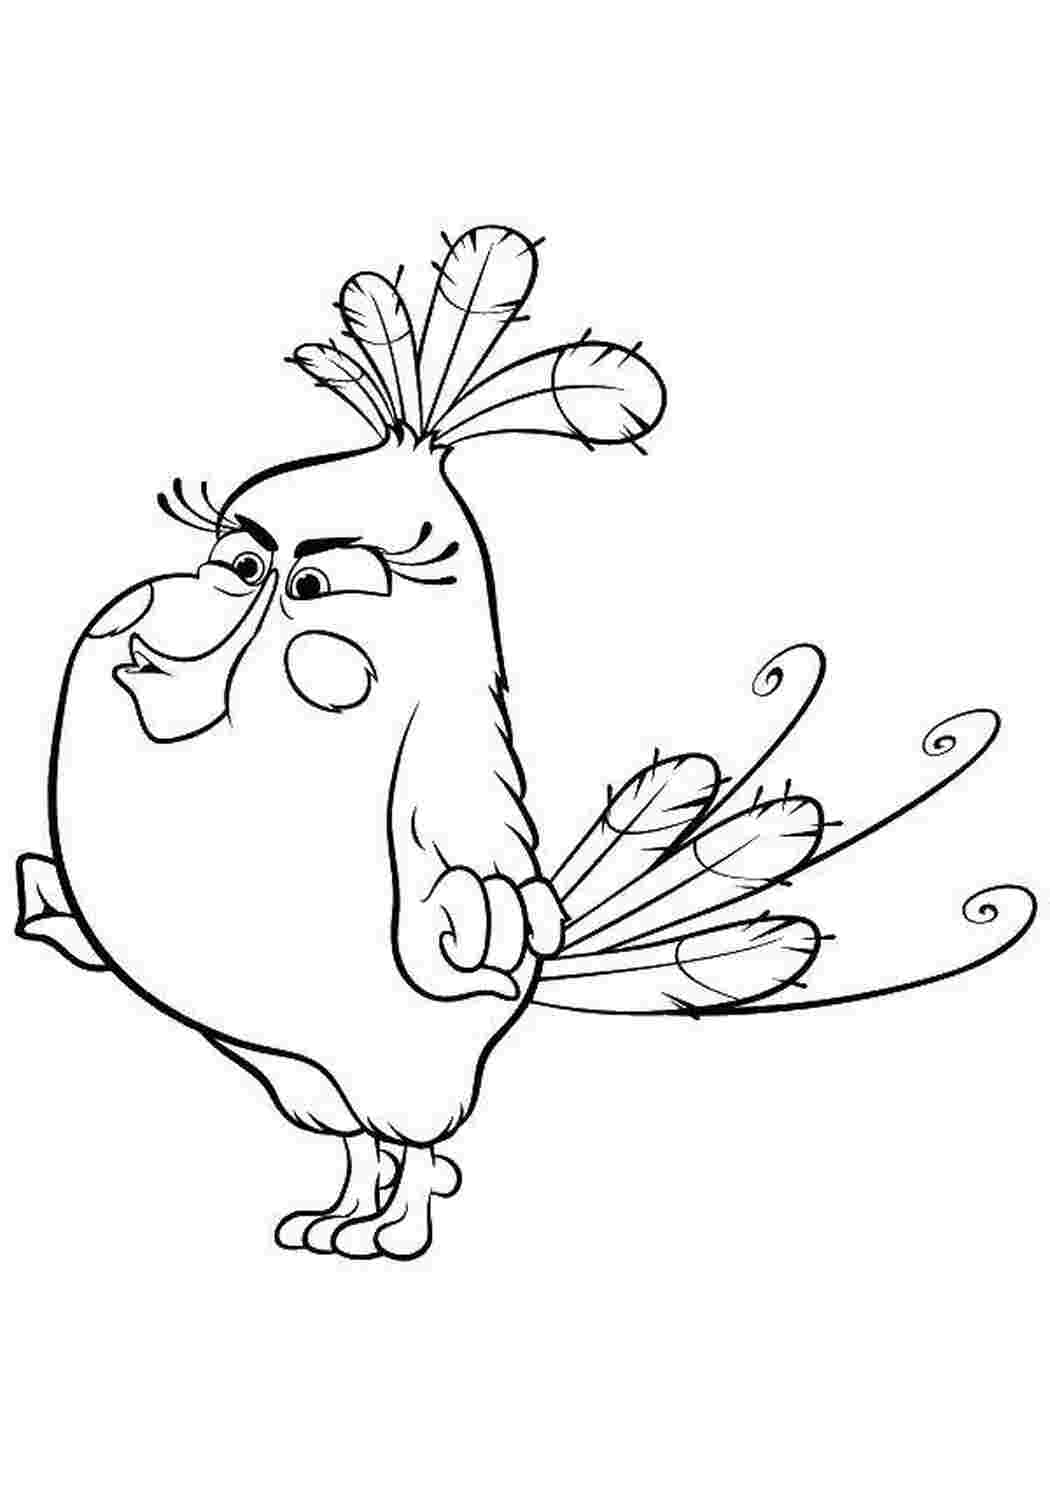 Онлайн раскраска Angry Birds